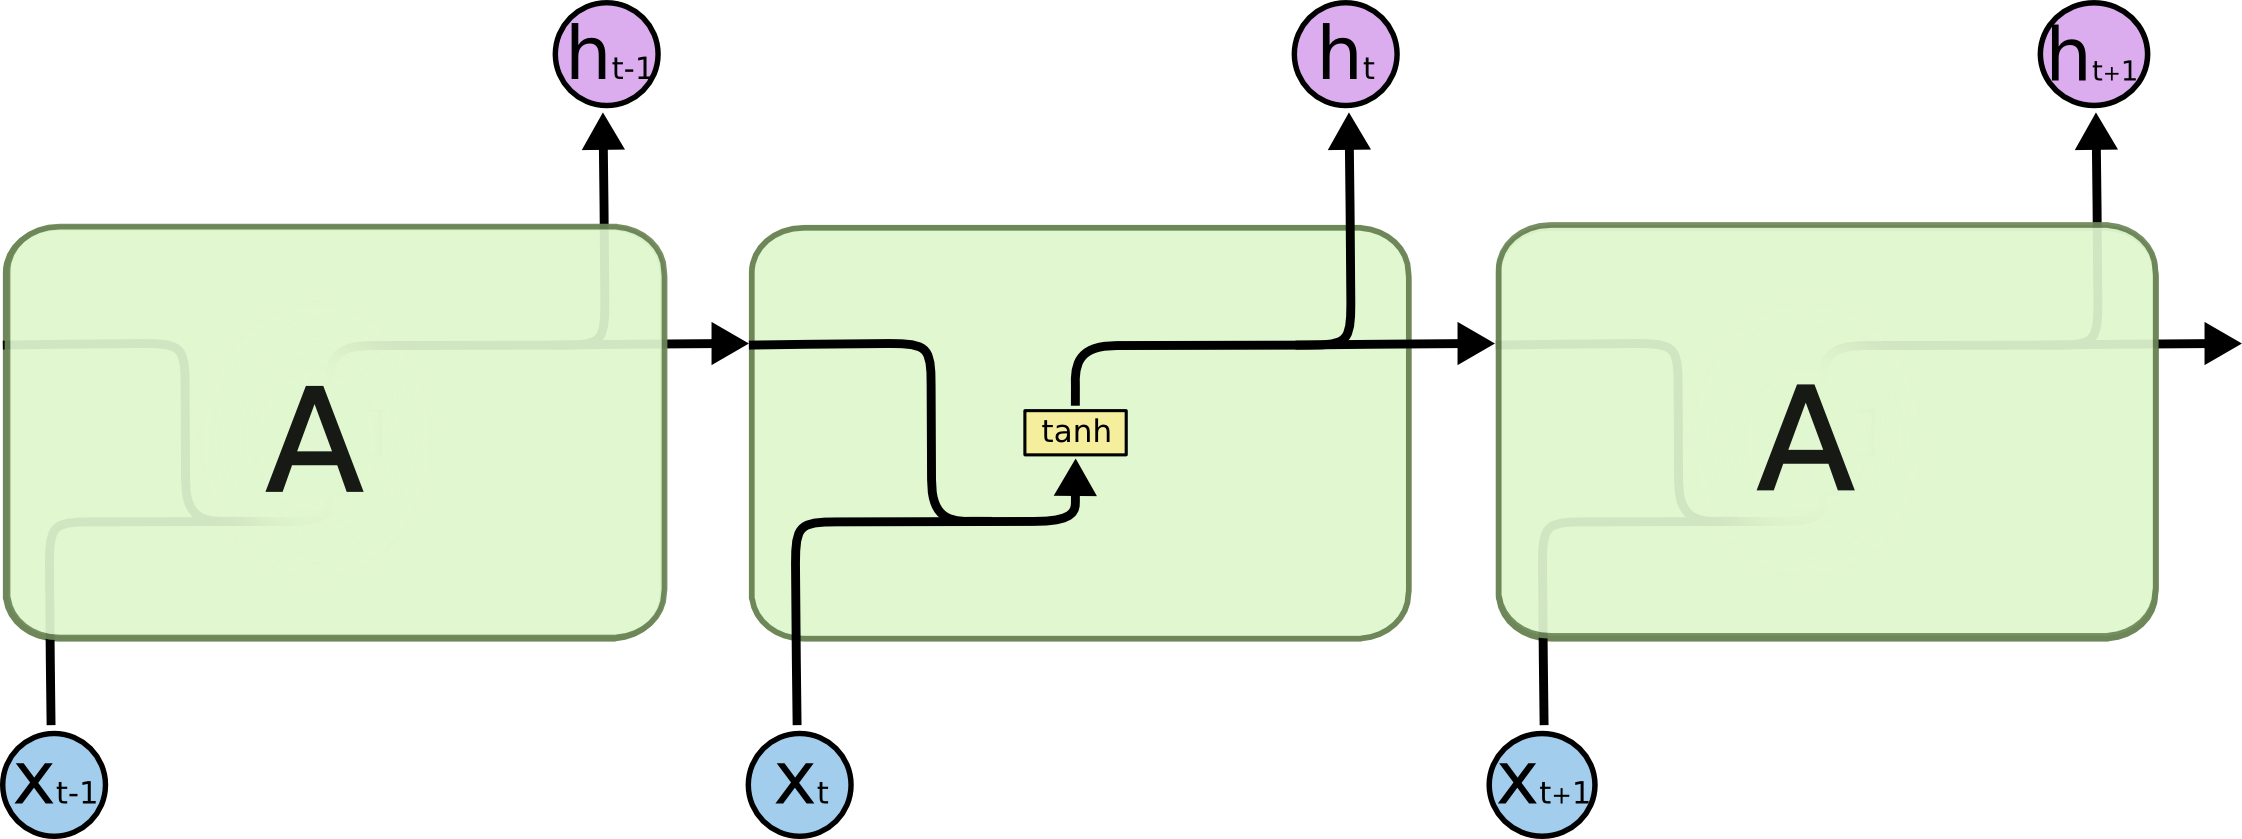 RNN 的循环模块具有一个层。